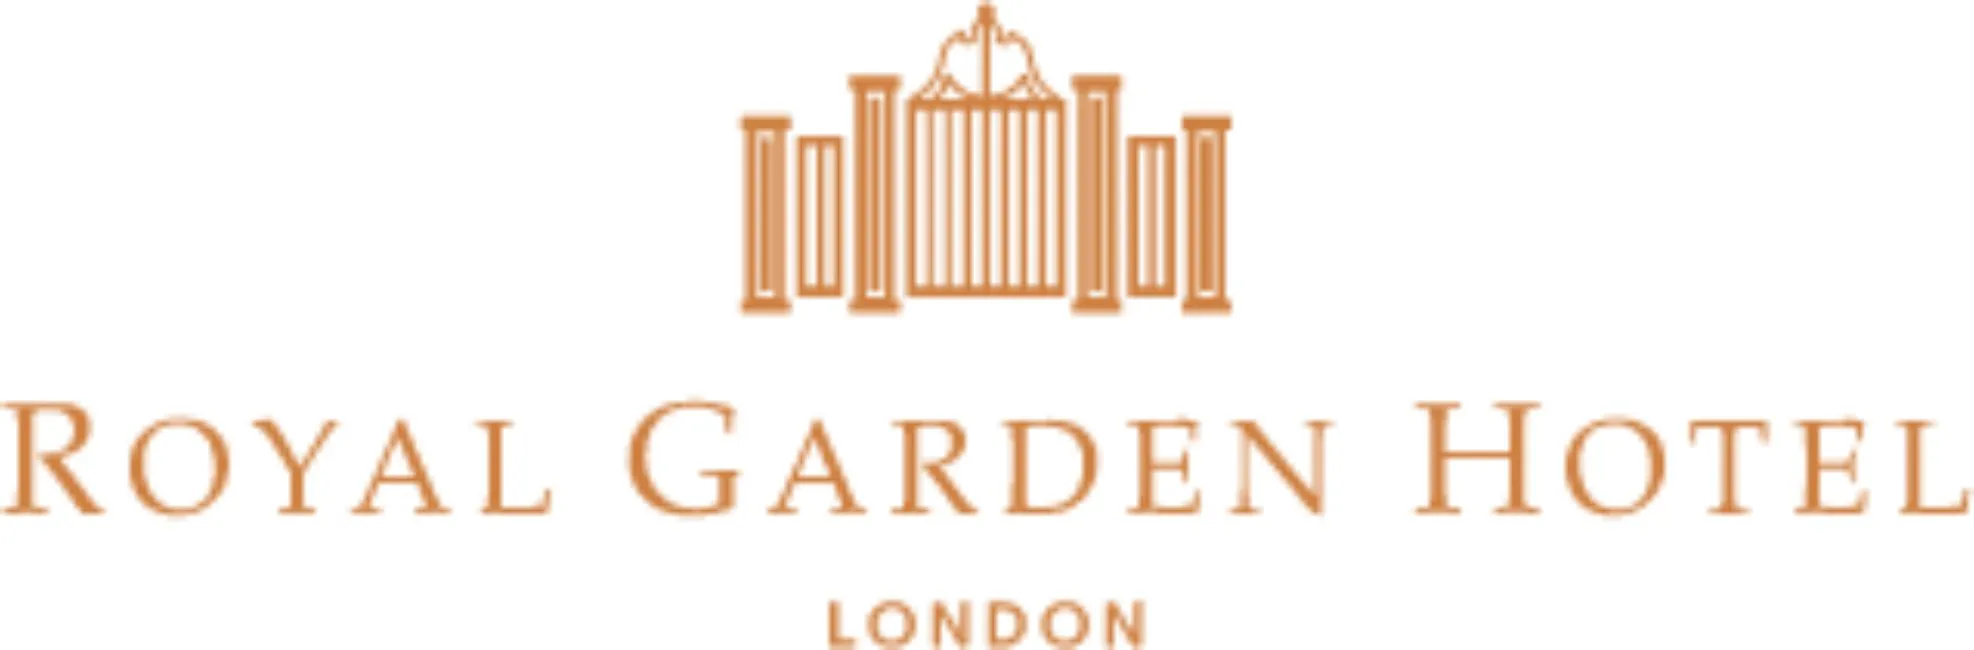 Job Vacancy  The Royal Garden Hotel London  Image 1